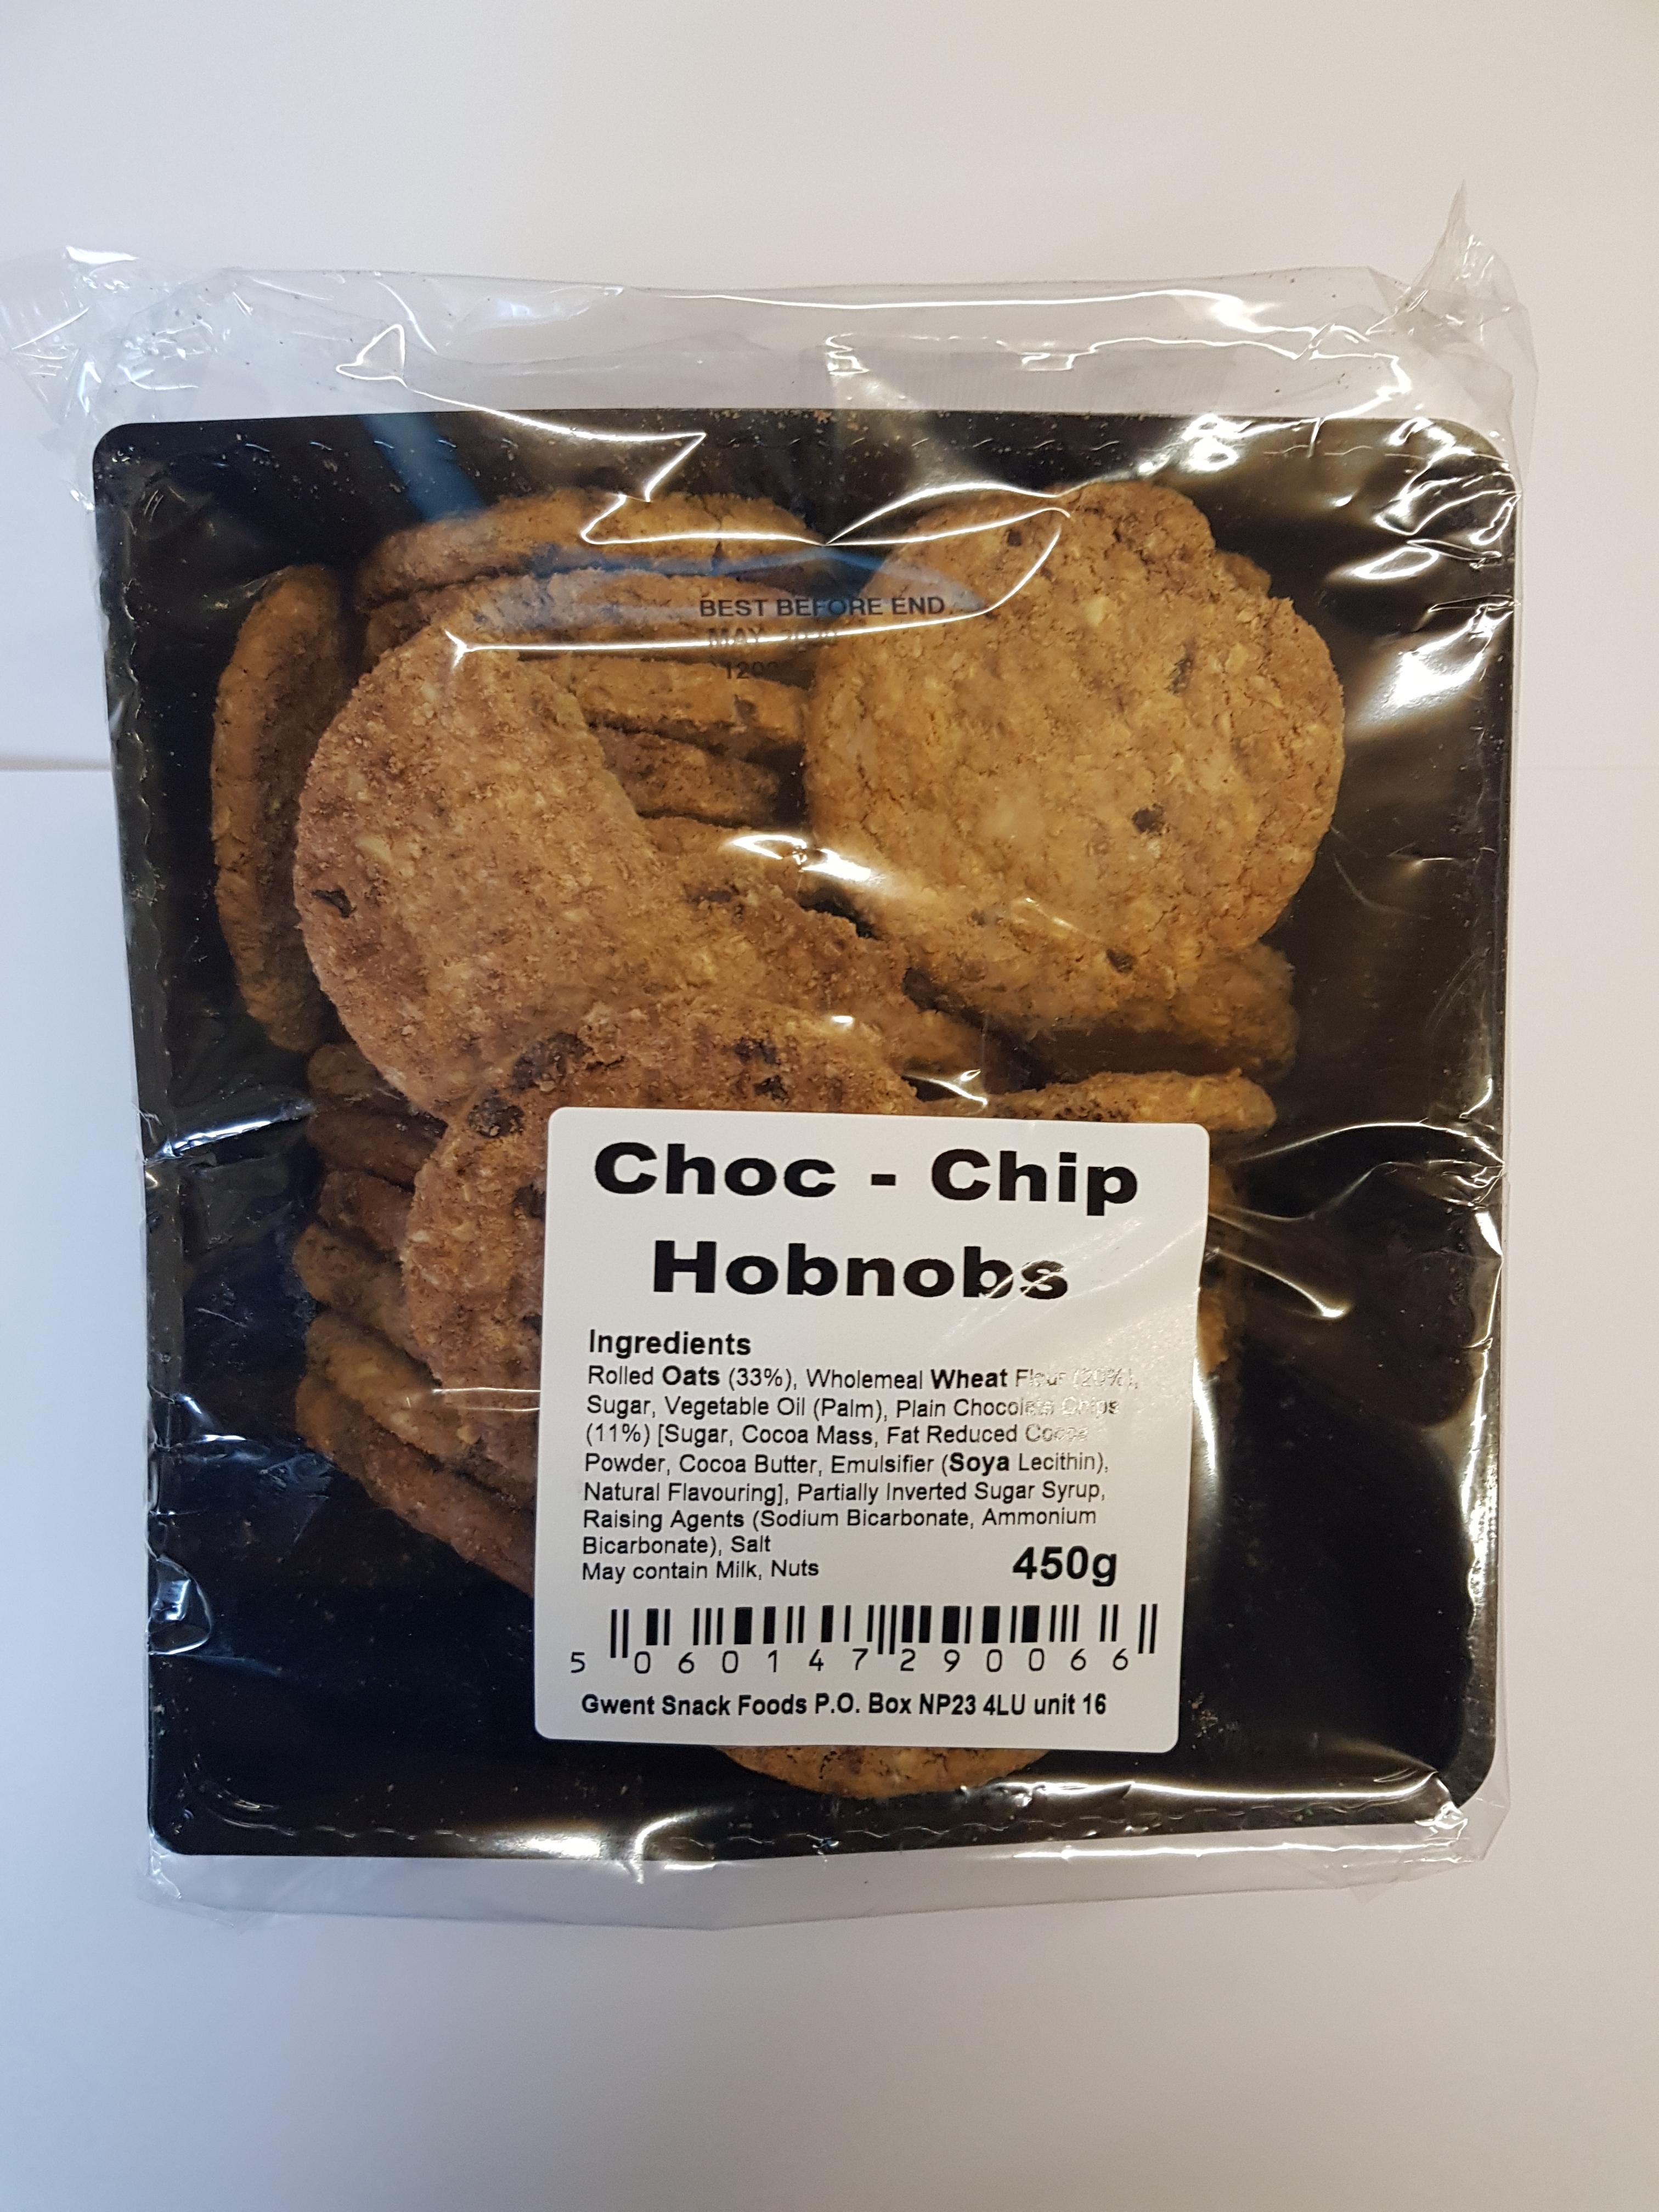 P/W Hob Nob Choc Chip Cookies